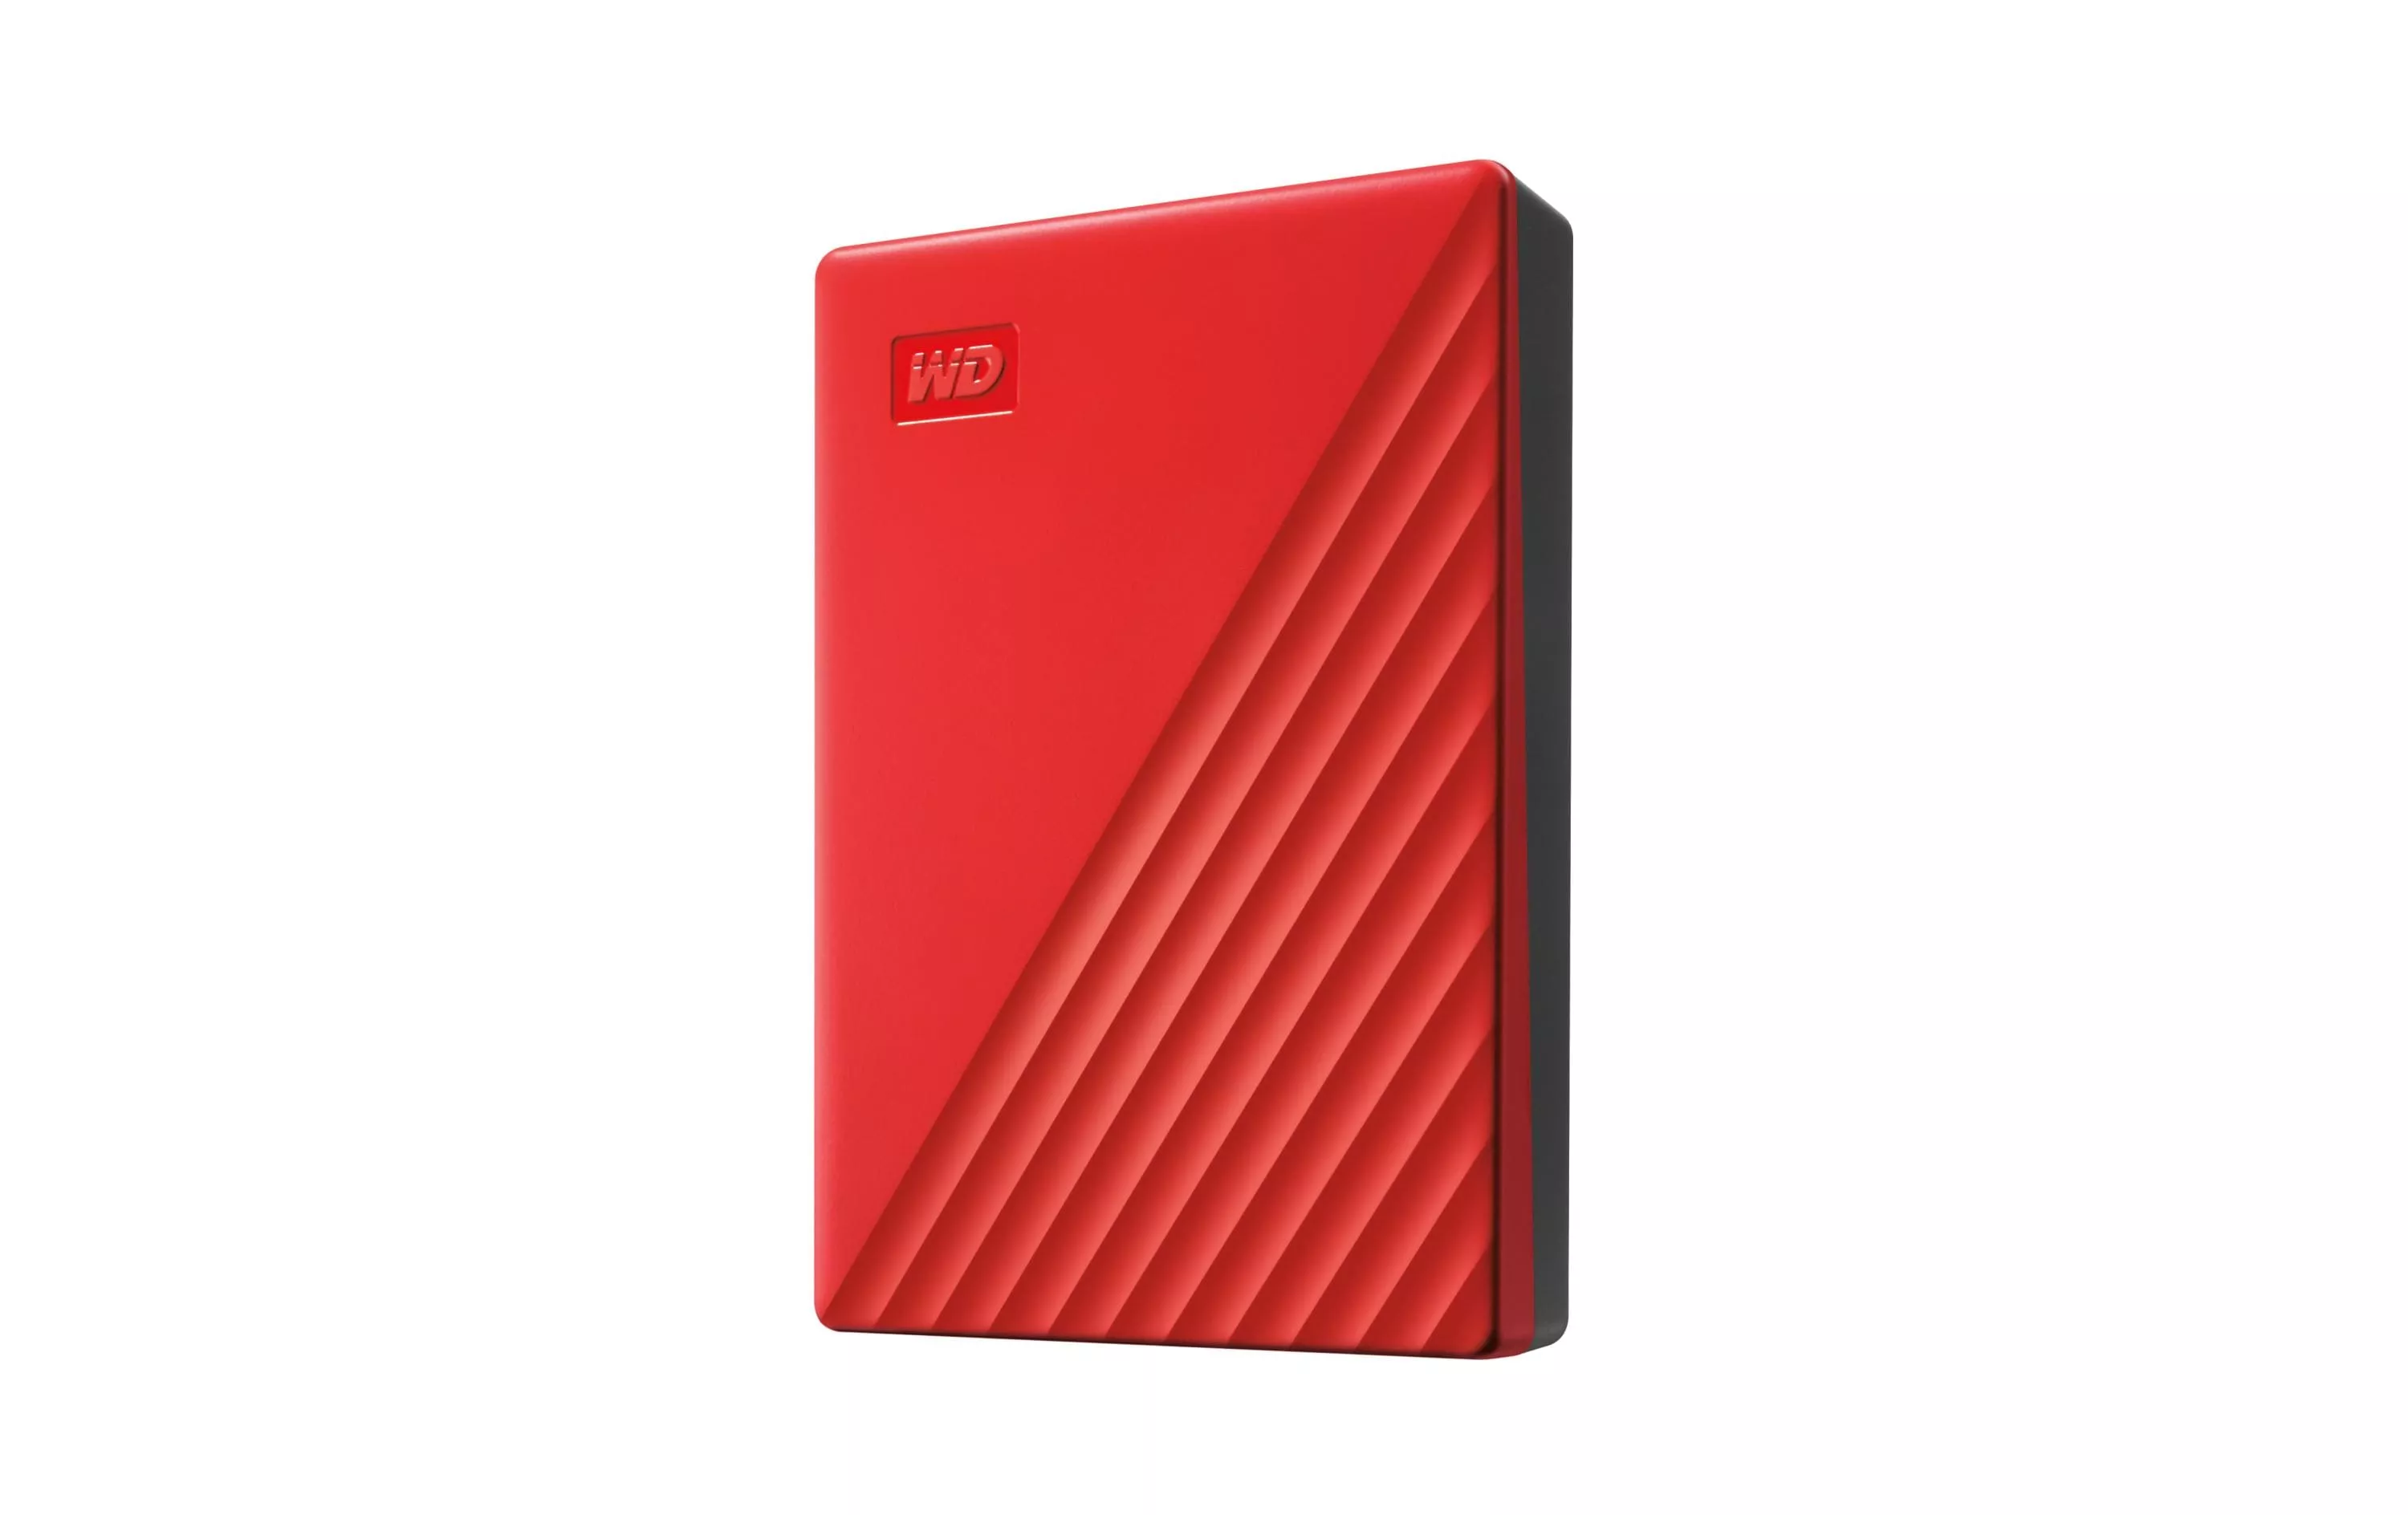 Disco rigido esterno Western Digital My Passport 4 TB, rosso